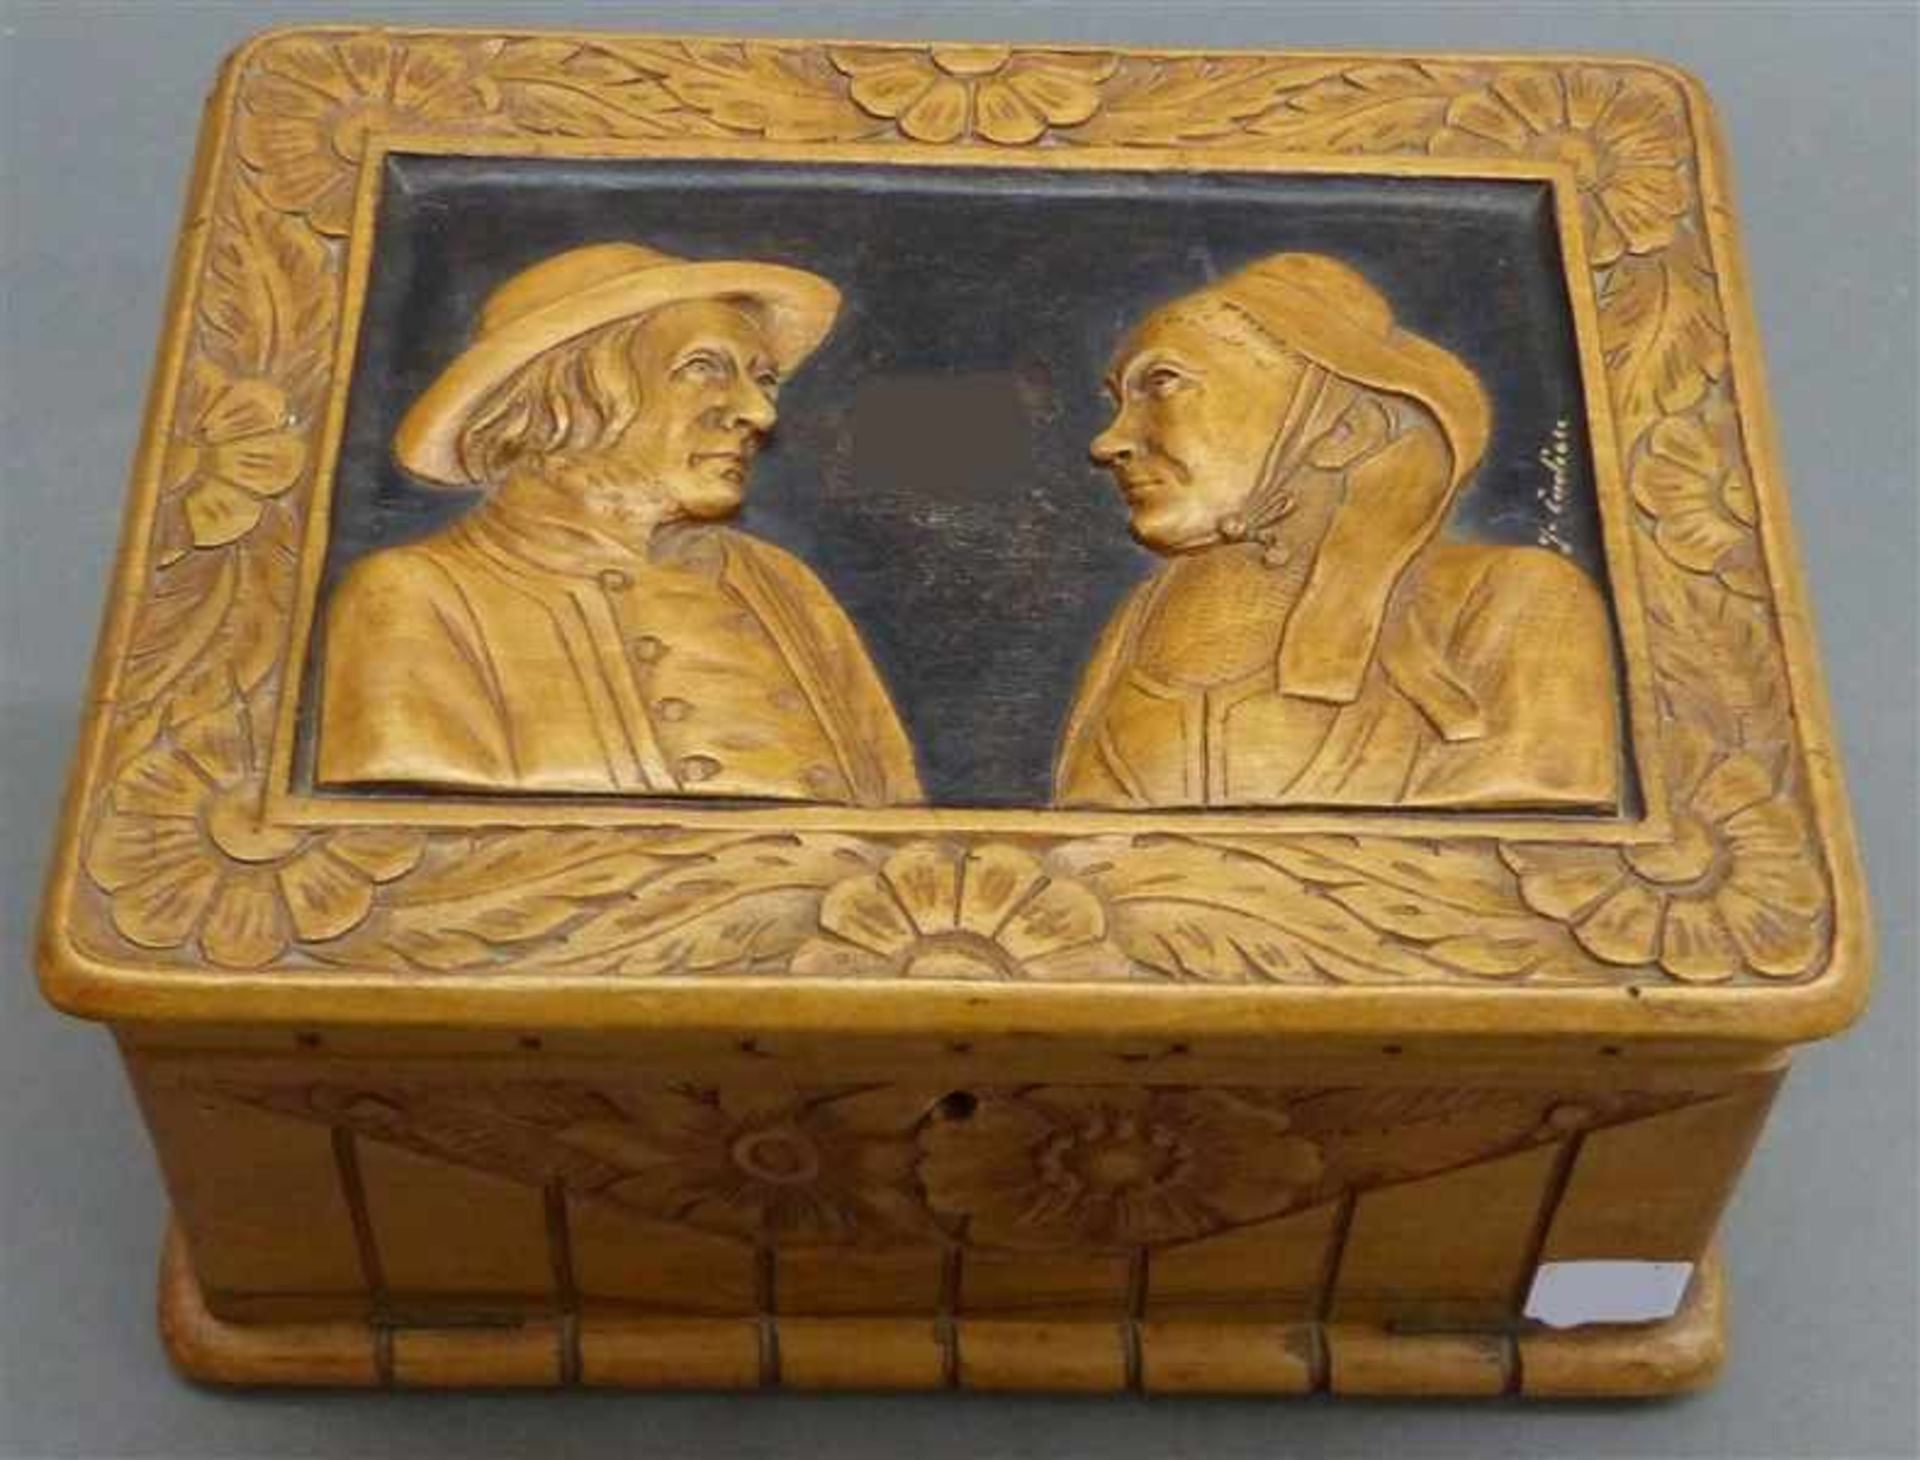 Zigarrenschachtel Holz, beschnitzt, floraler Dekor, mittig Mann und Frau, 20. Jh., h 13 cm, b 23 cm,